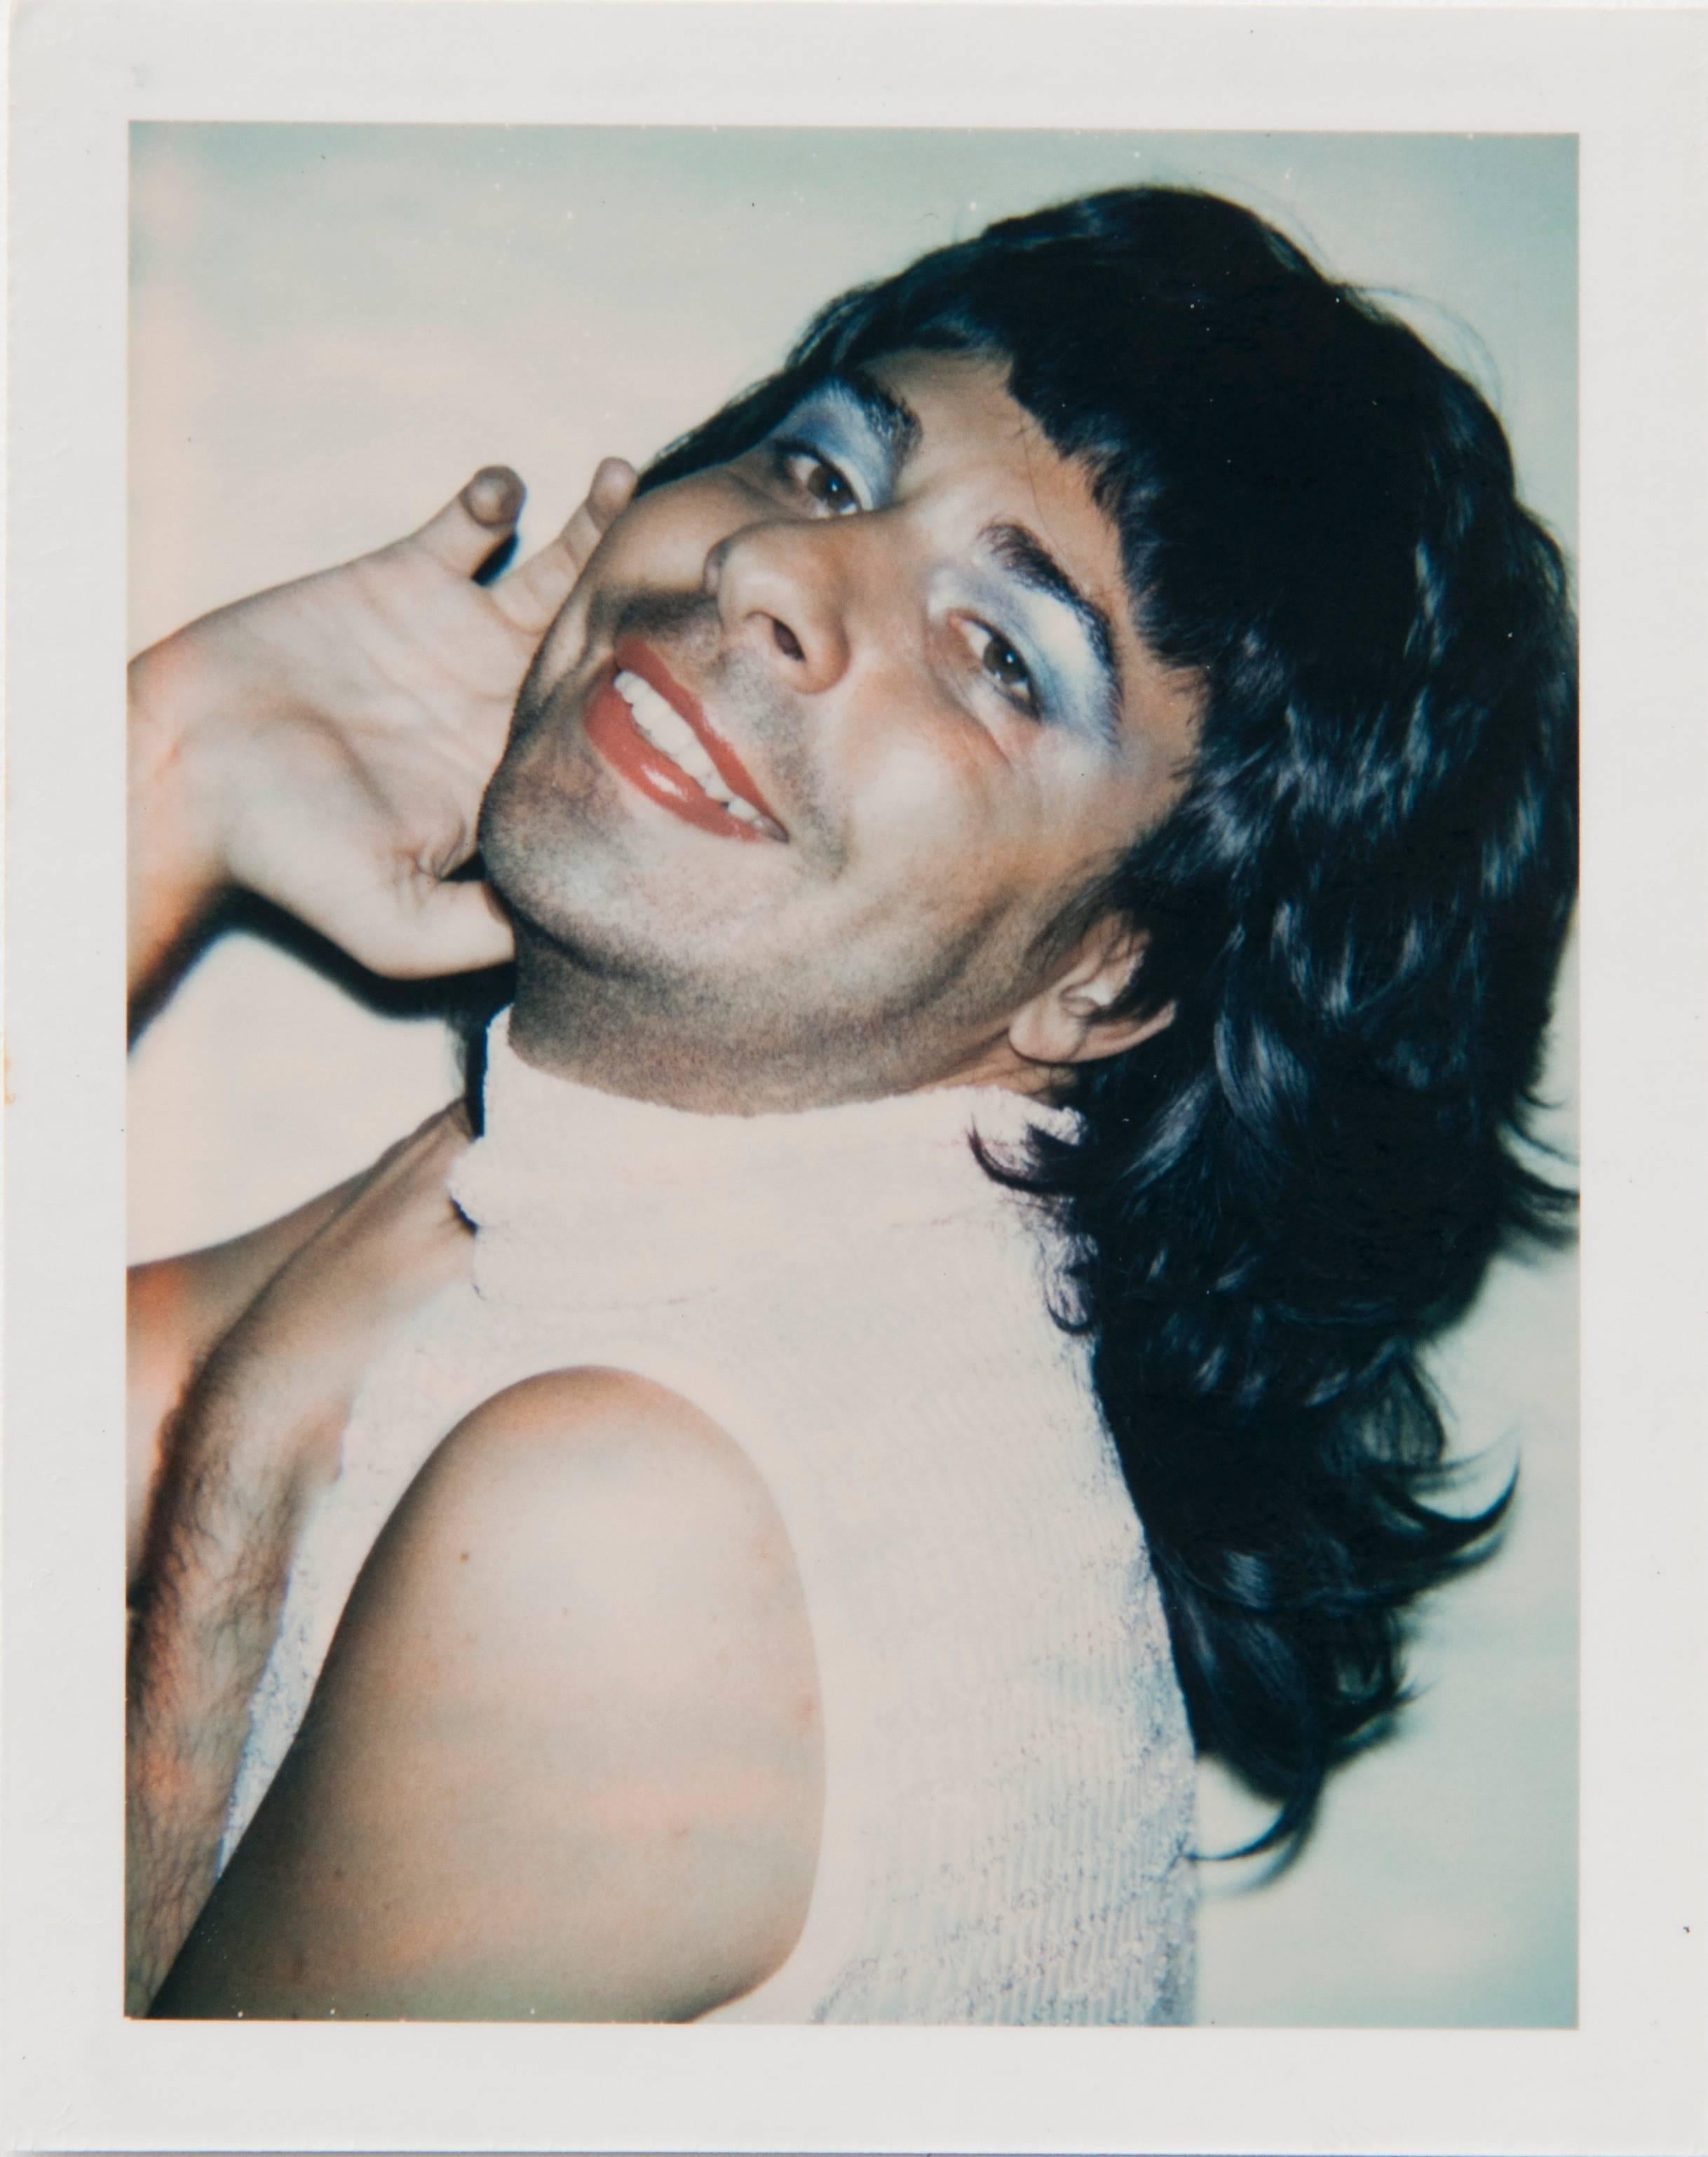 Andy Warhol Portrait Photograph - Bob Colacello in DRAG Polaroid 